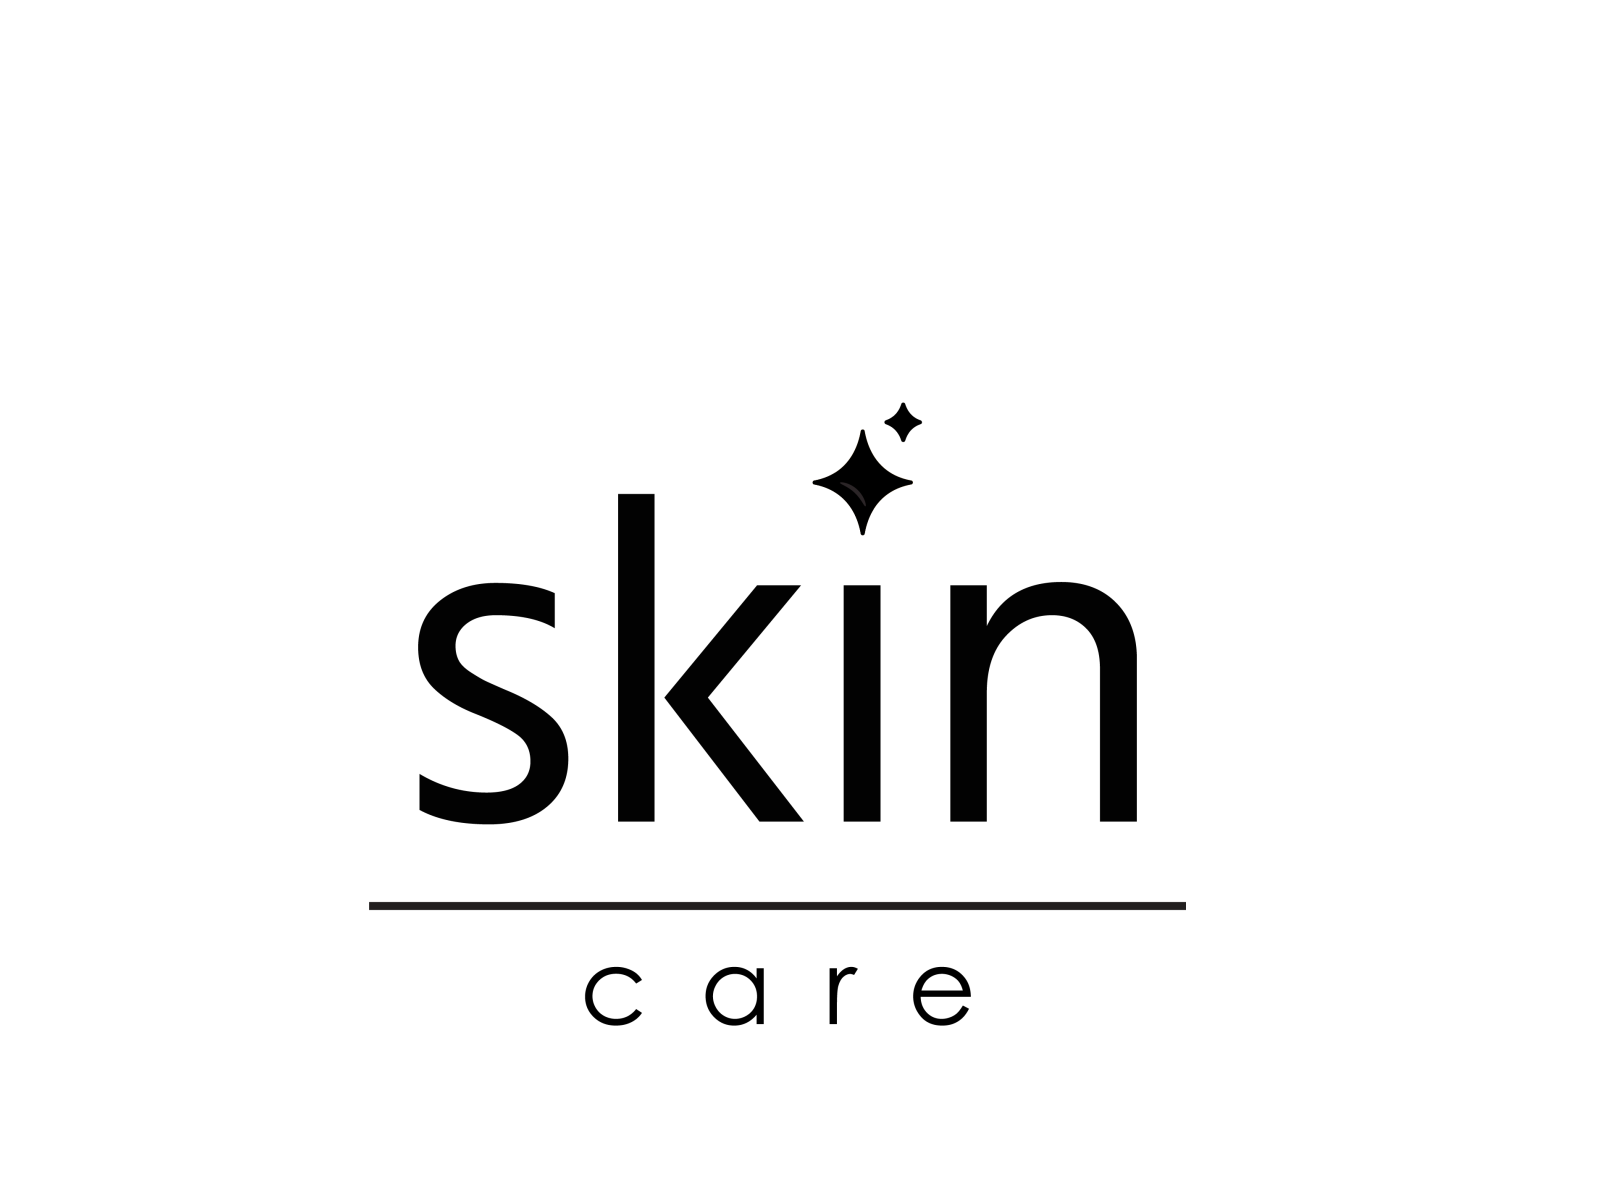 skin care logo by Matea Shumkovska on Dribbble